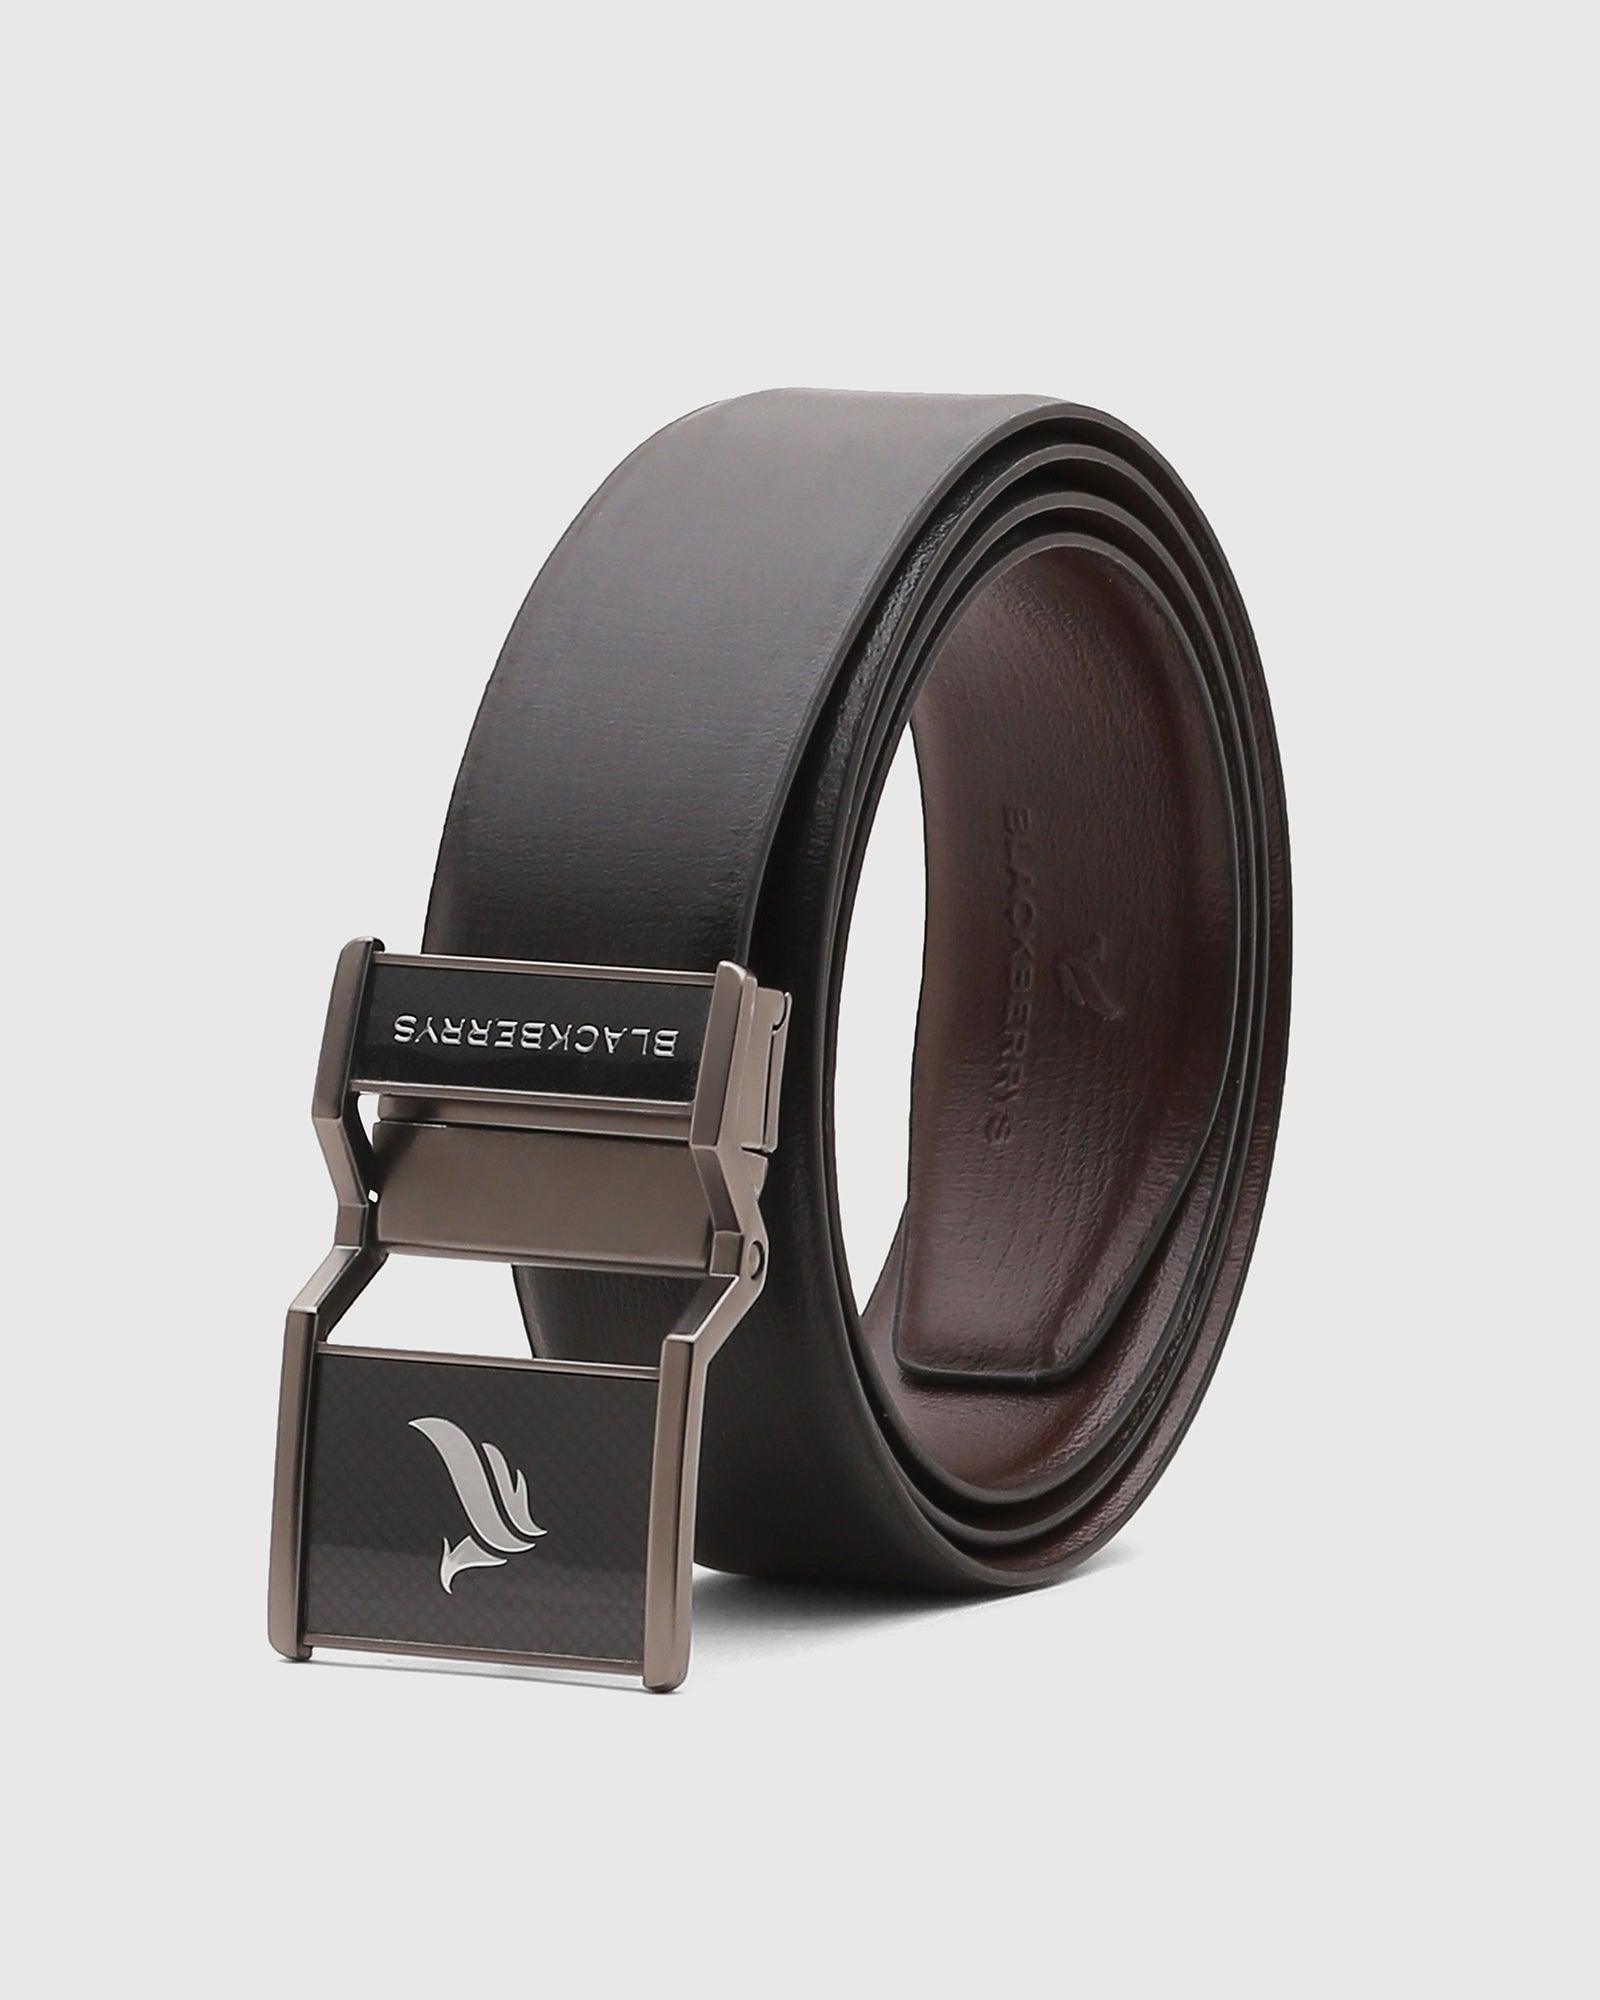 Leather Reversible Black Brown Solid Belt - Shane